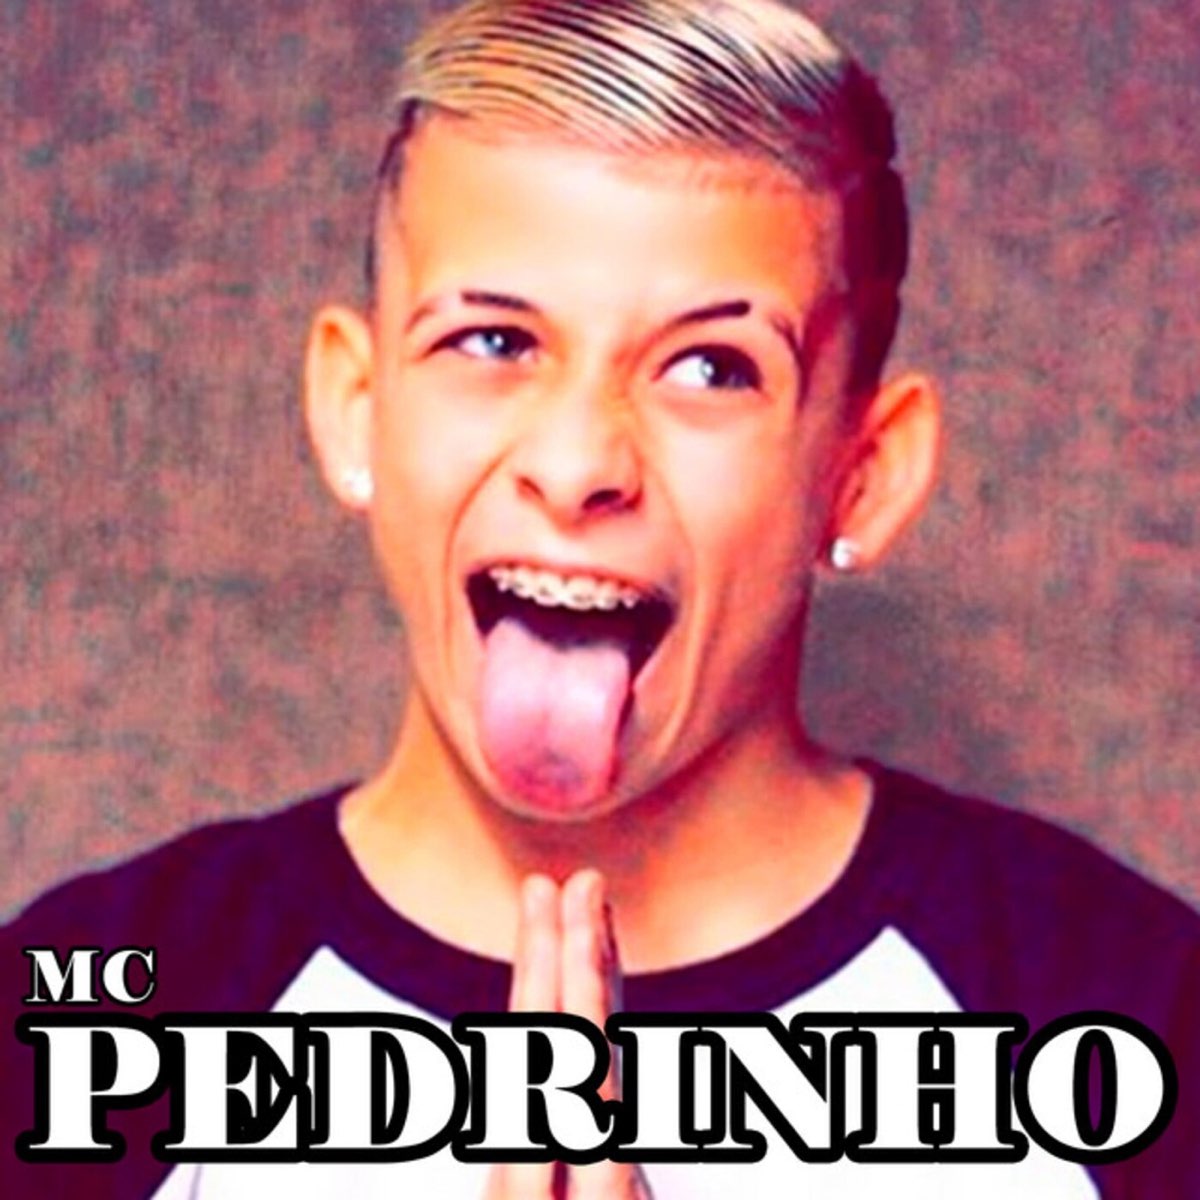 ‎Mc Pedrinho - EP - Album by Mc Pedrinho - Apple Music